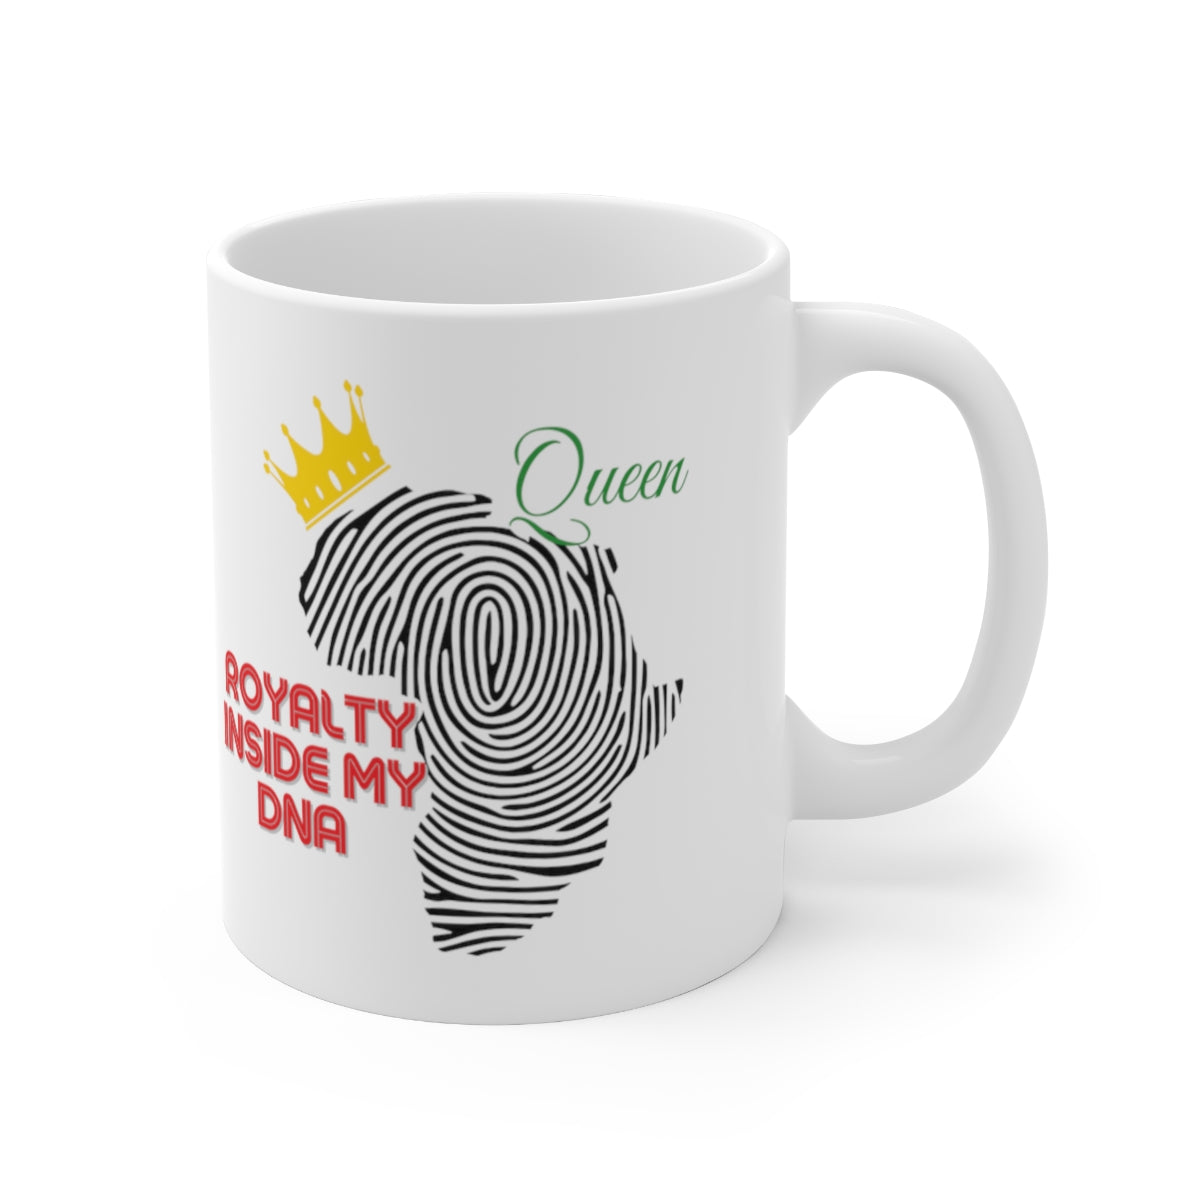 Royalty Inside My DNA, Queen Mug